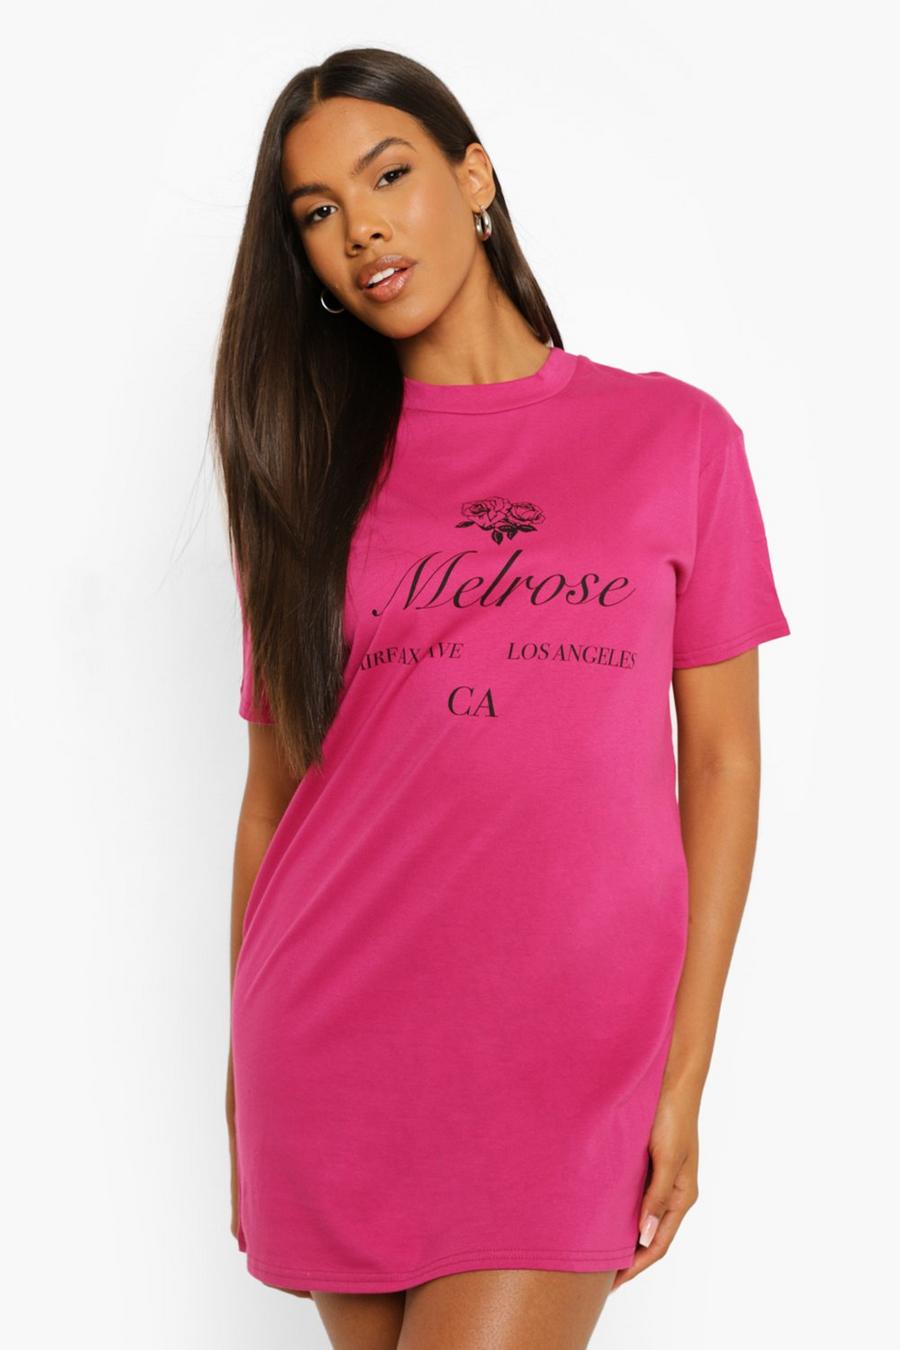 T-Shirt-Kleid mit Melrose-Slogan, Hot pink image number 1